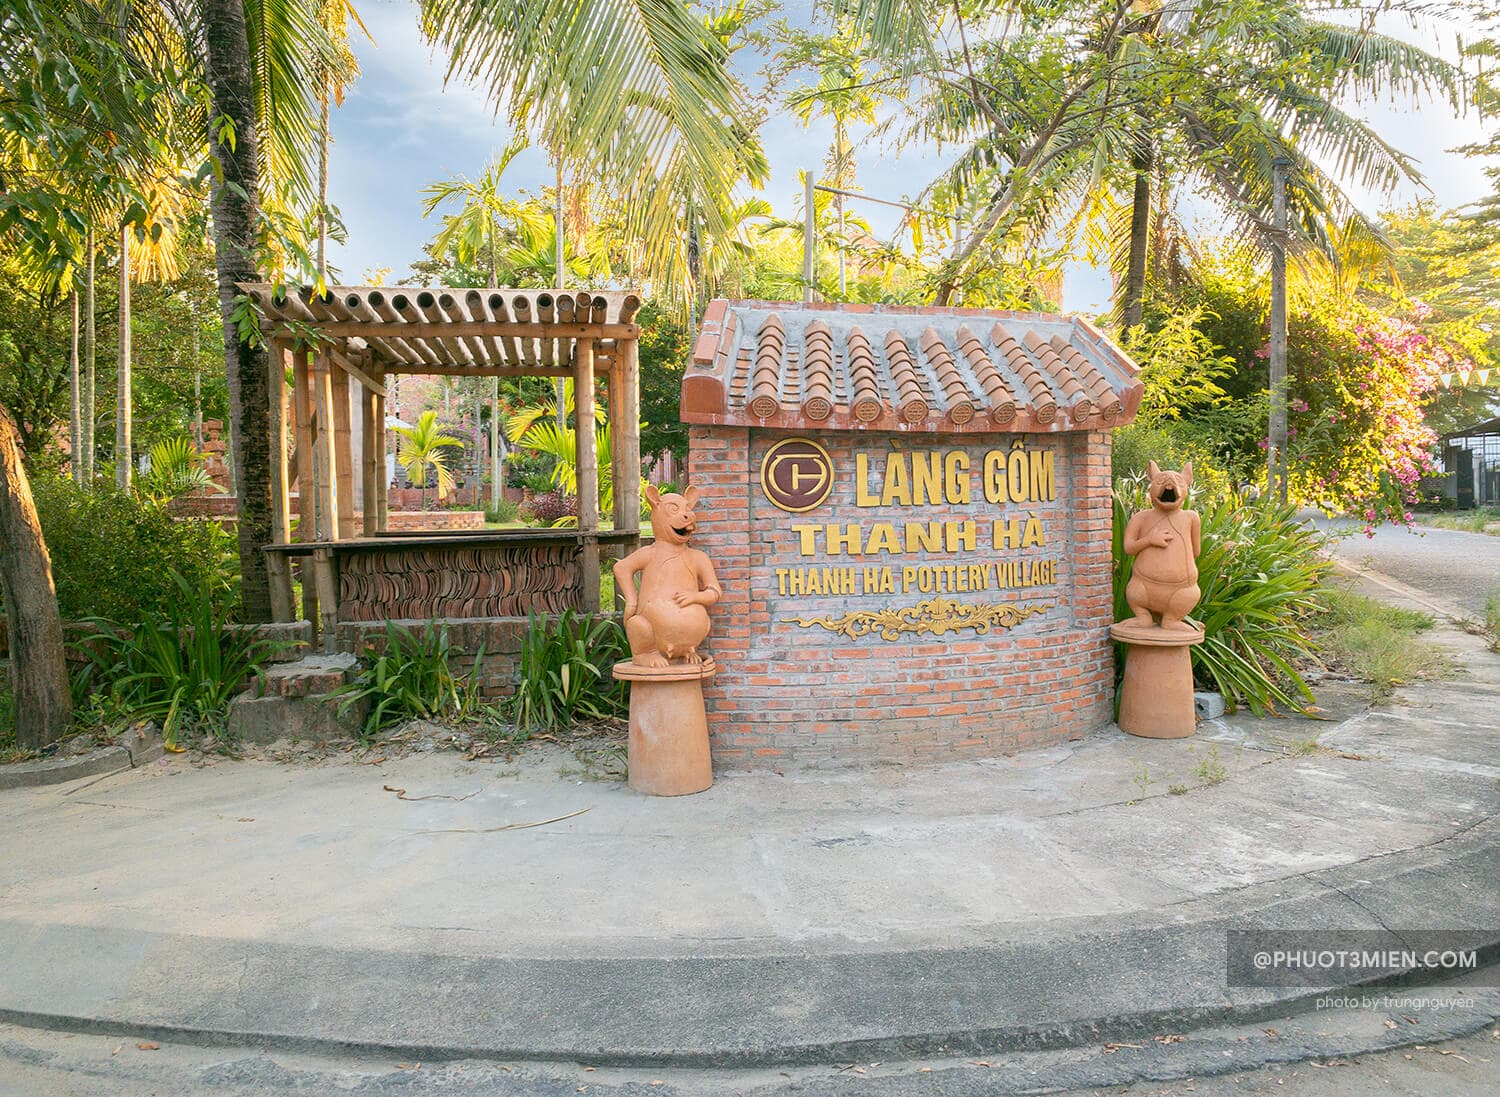 Thanh Ha village